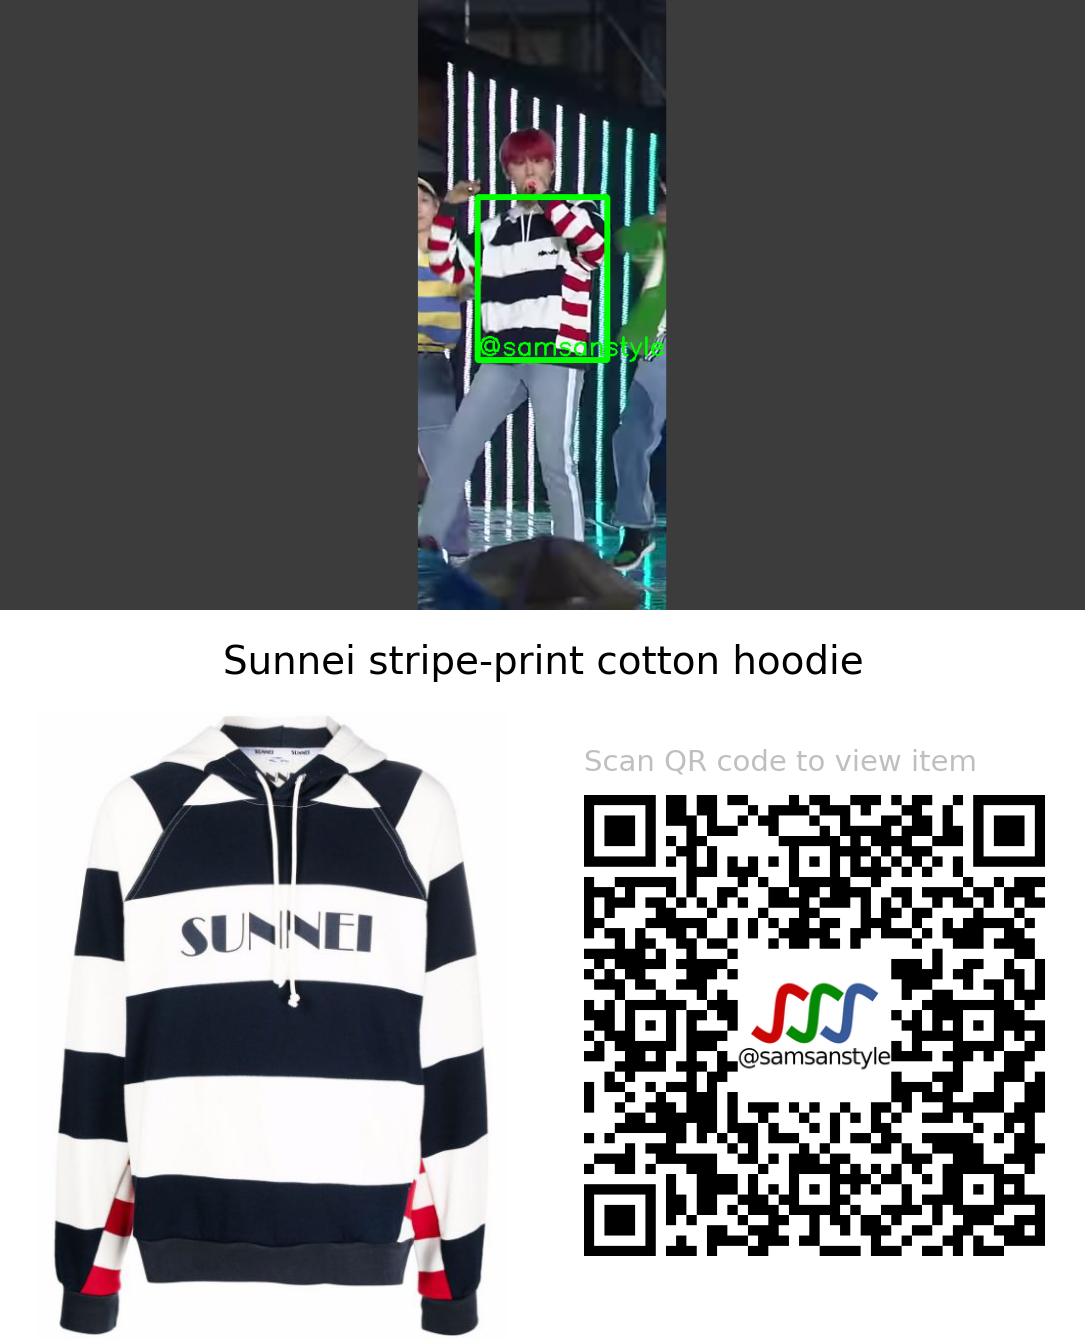 AB6IX Woojin | CHERRY 2021 Asia Song Festival | Sunnei stripe-print cotton hoodie